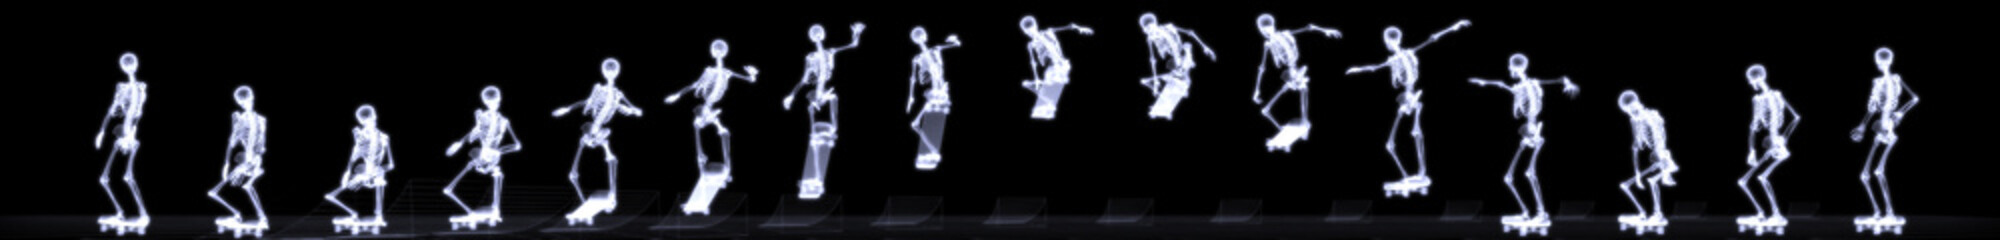 Xray of human skeleton jumping freestyle